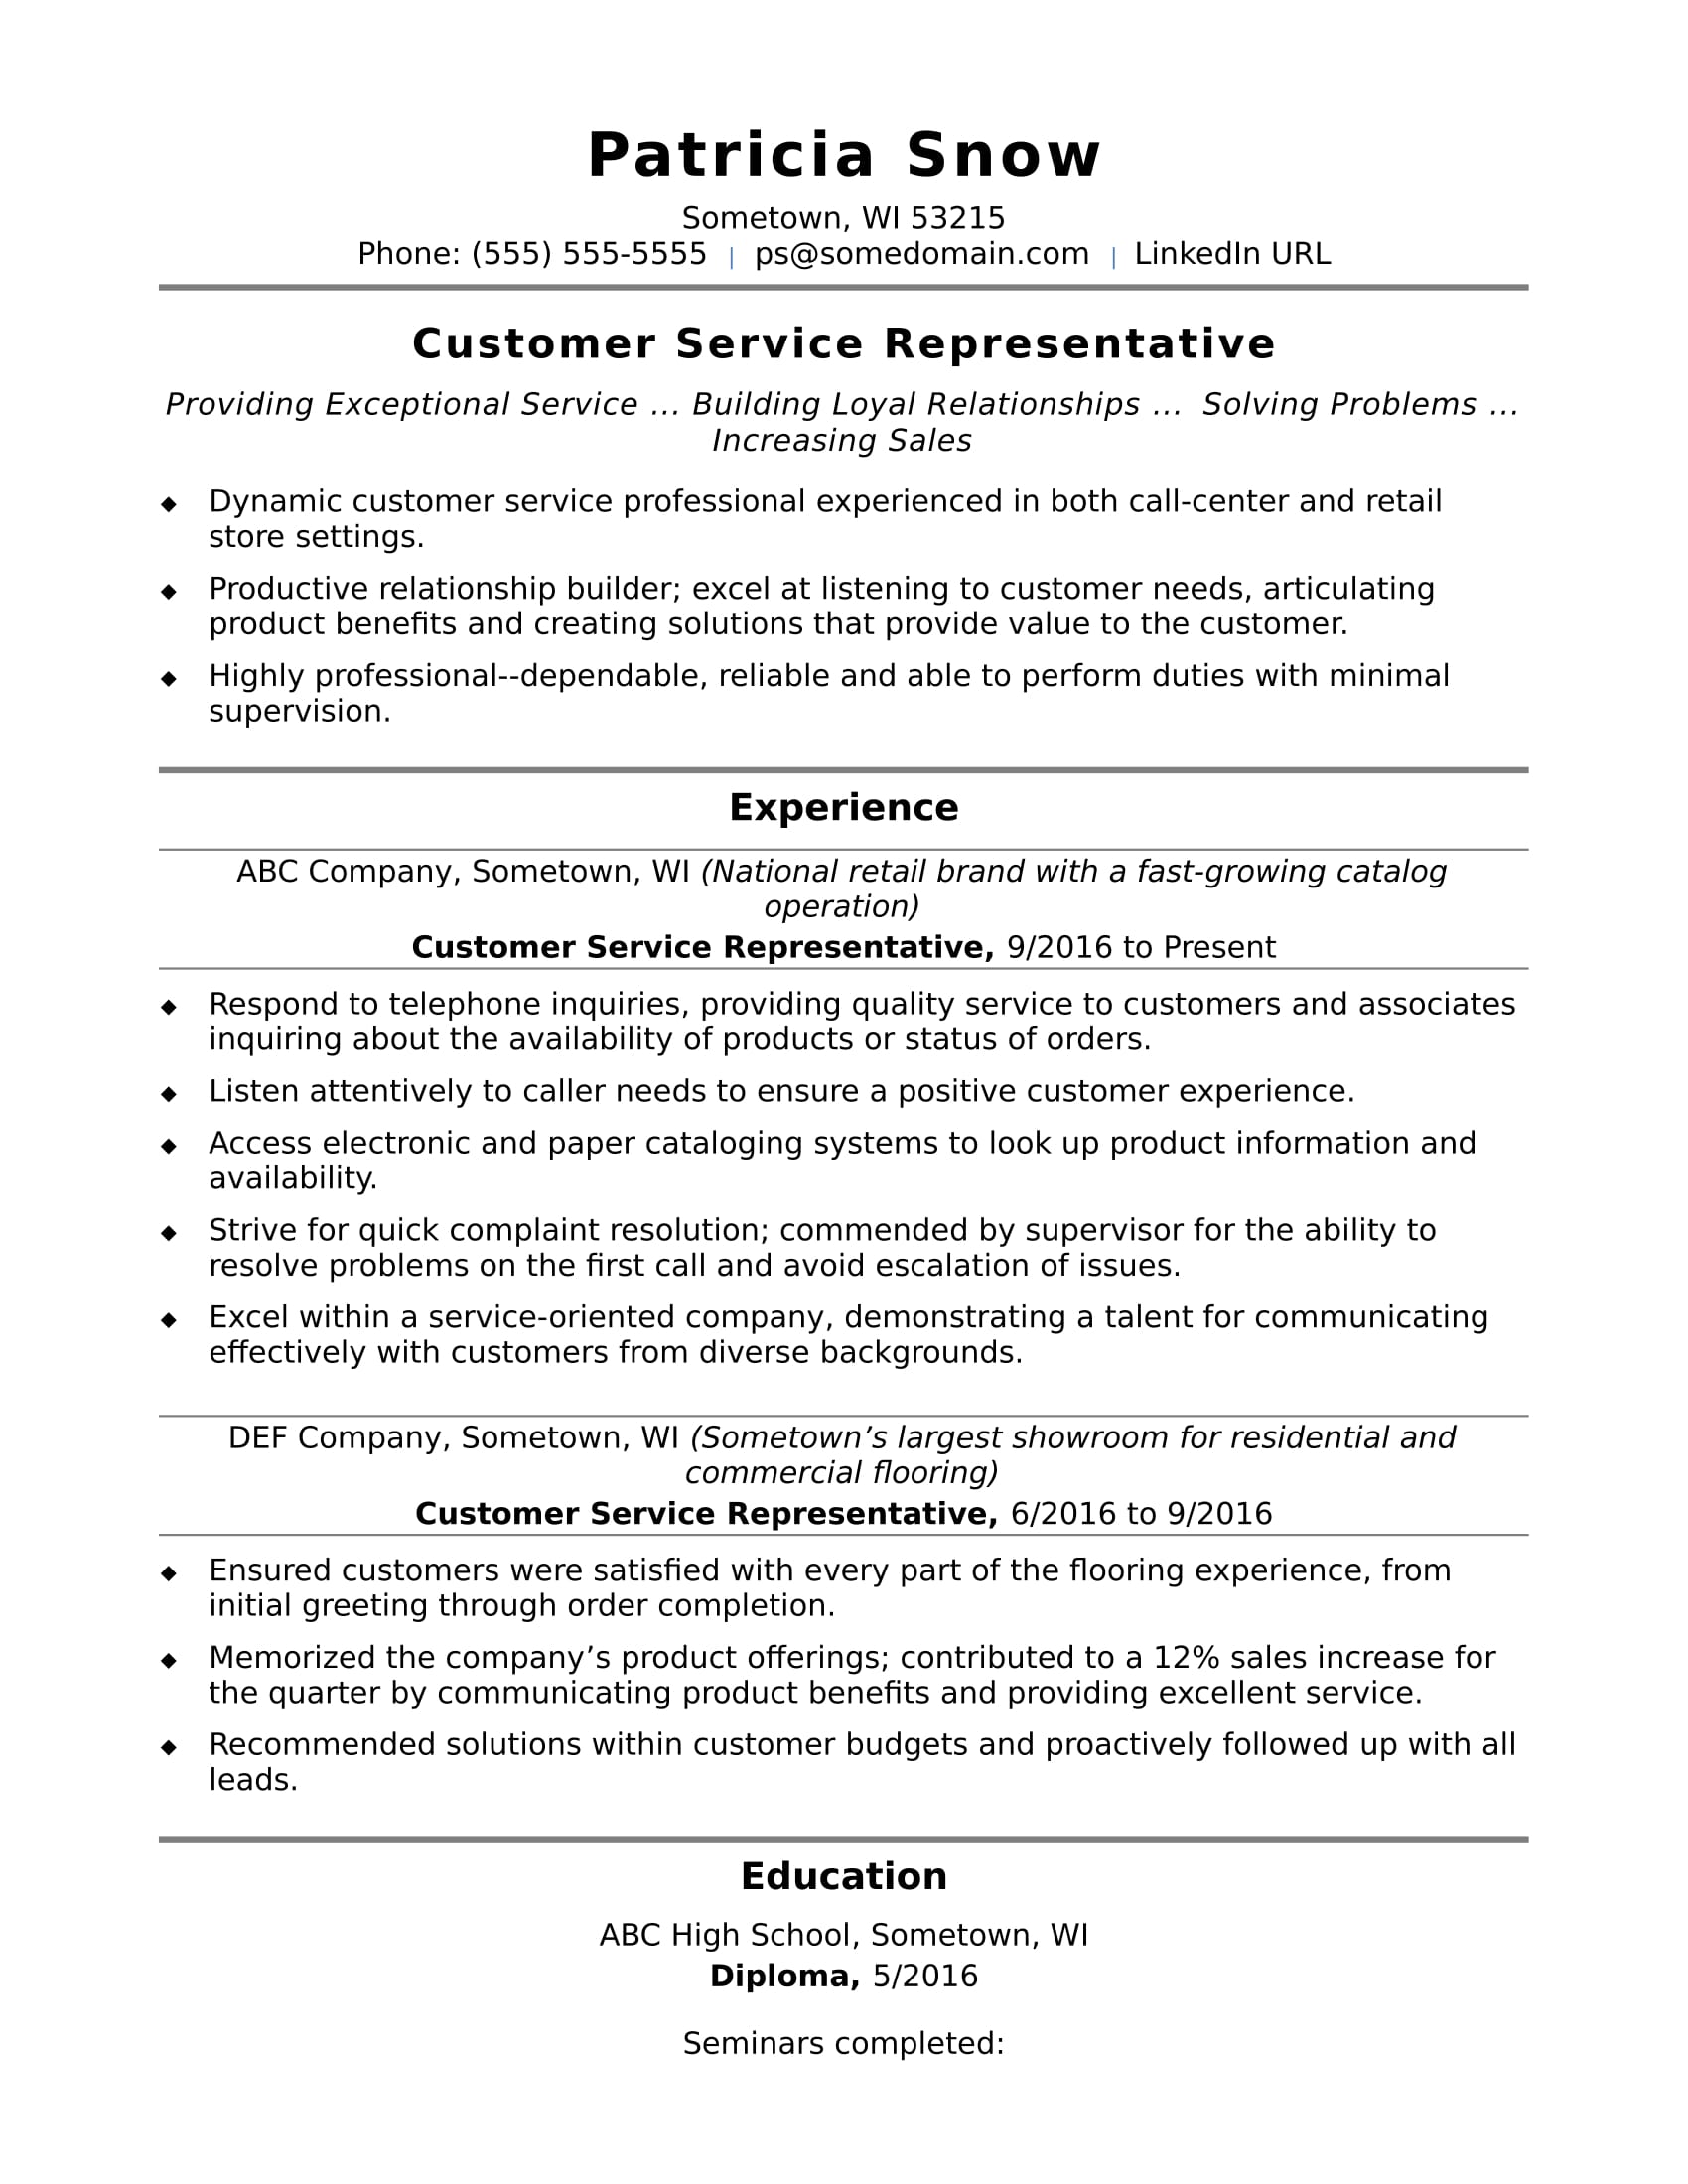 Customer Service Resume Writer February 2021